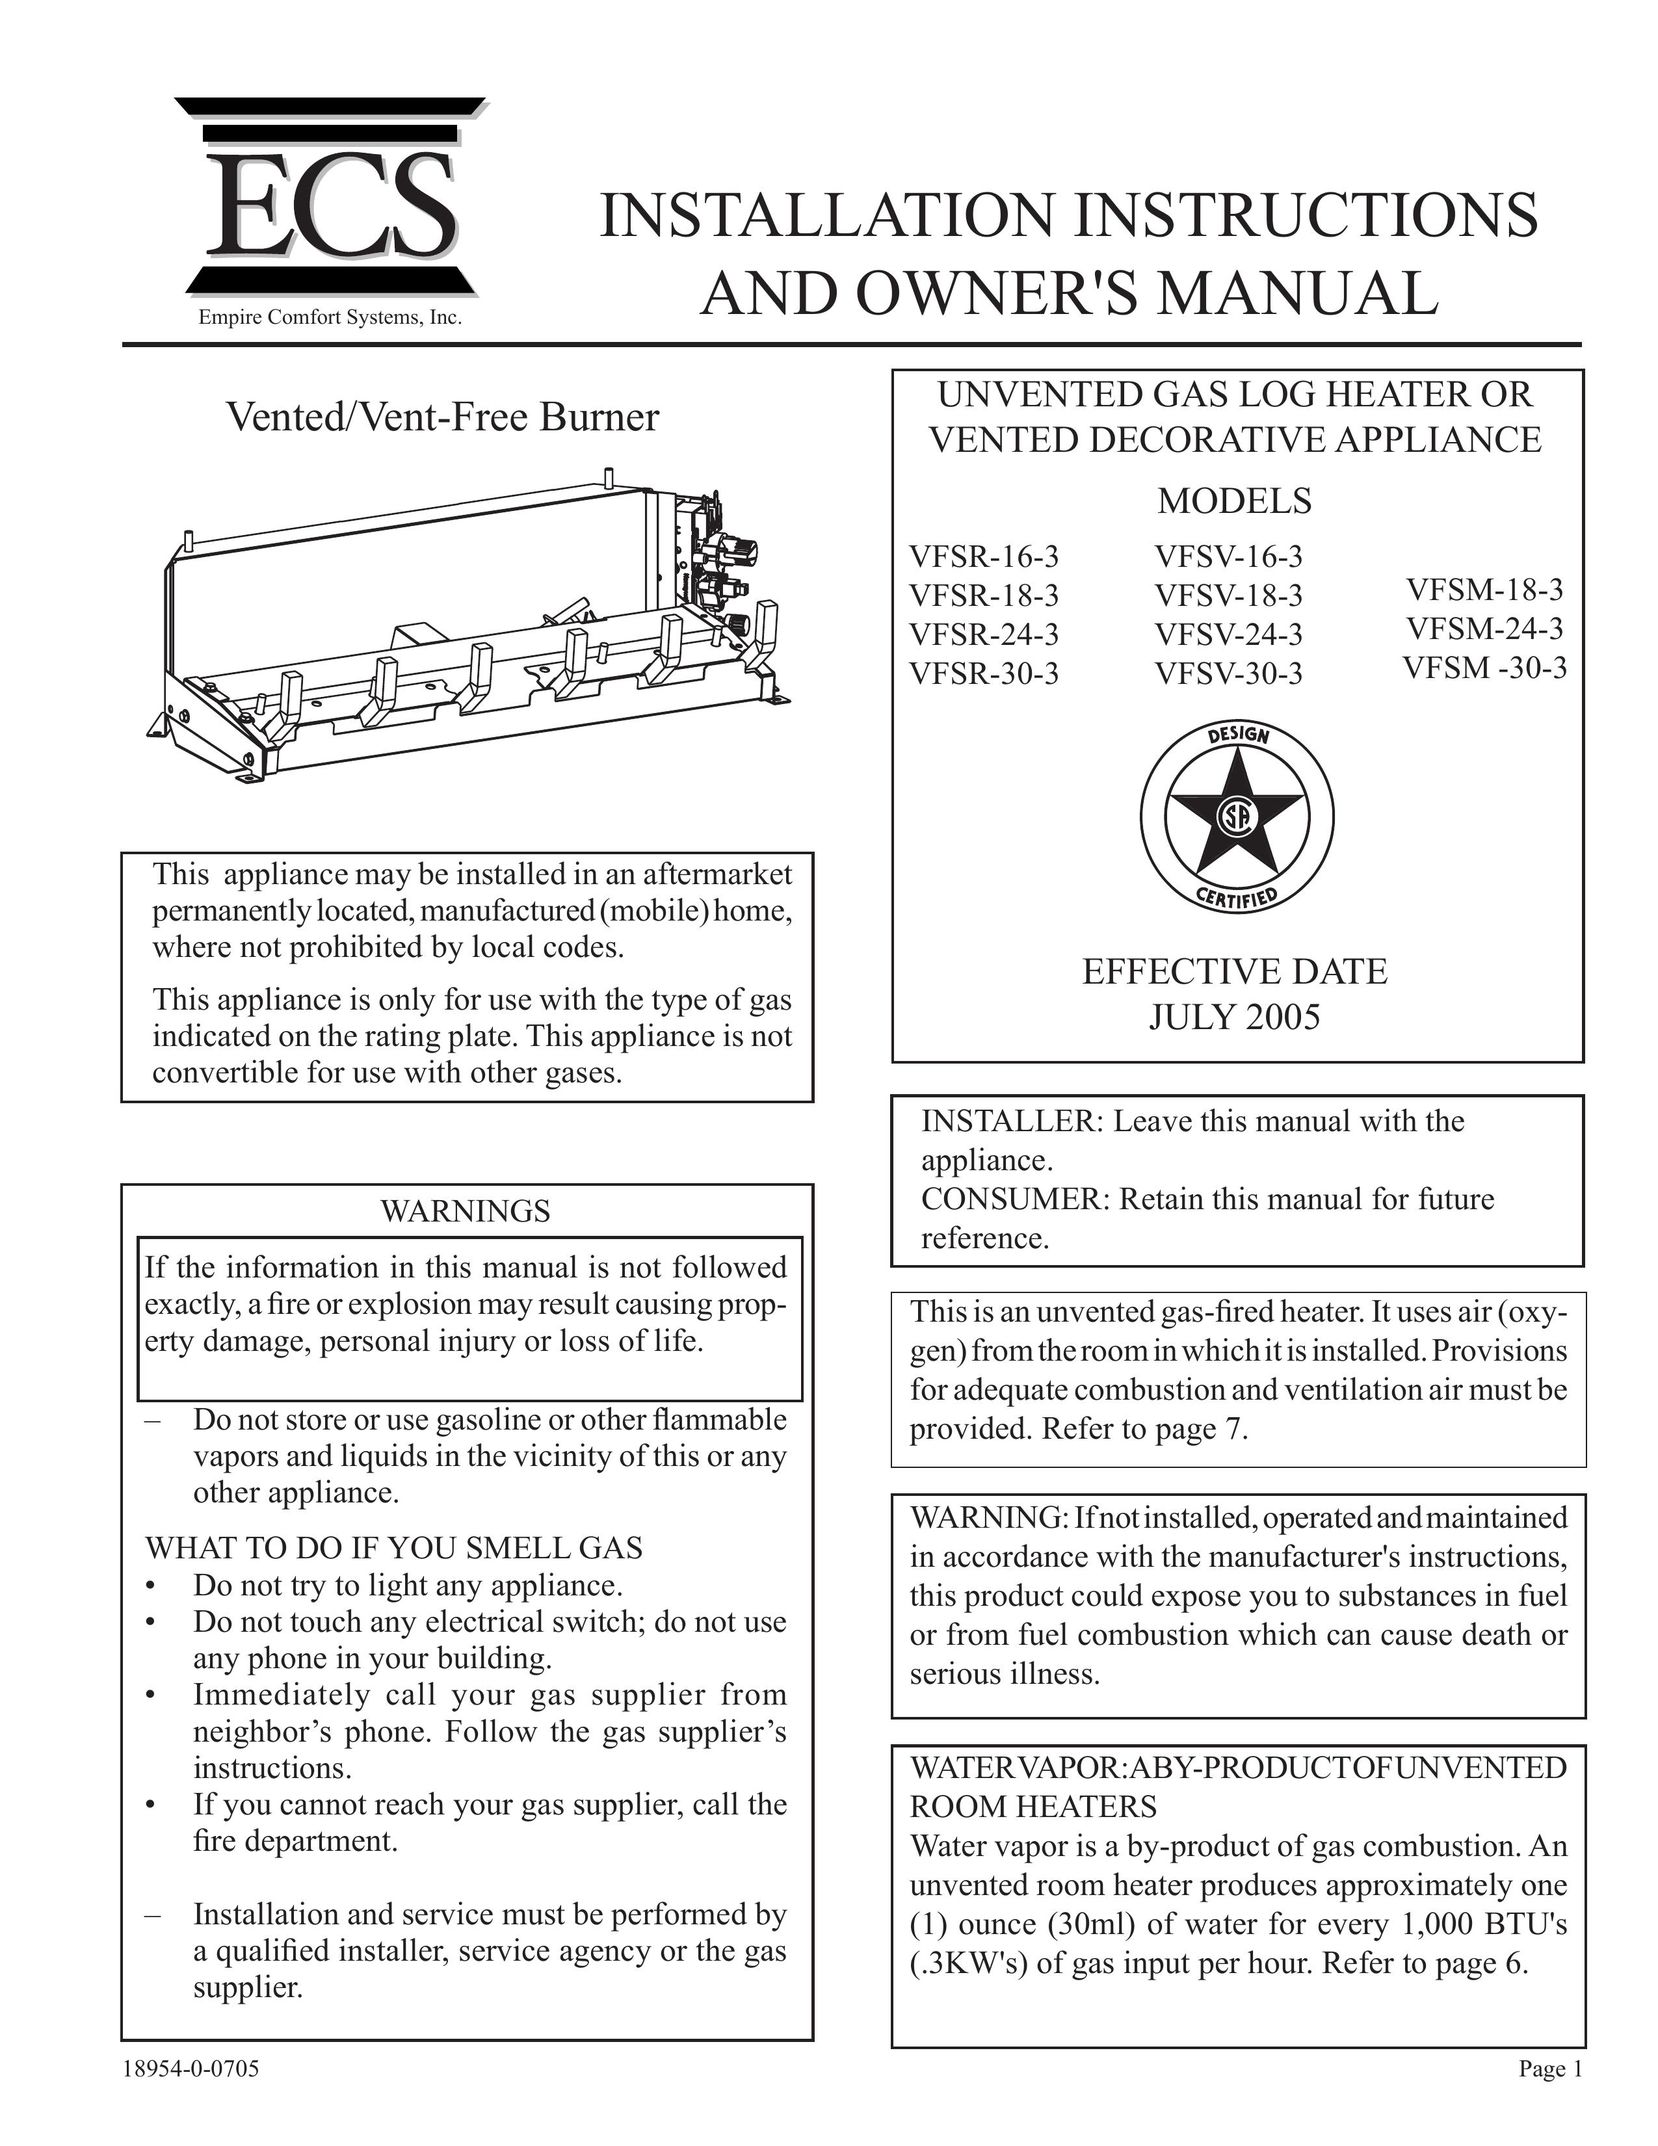 Empire Comfort Systems VFSV-24-3 Electric Heater User Manual